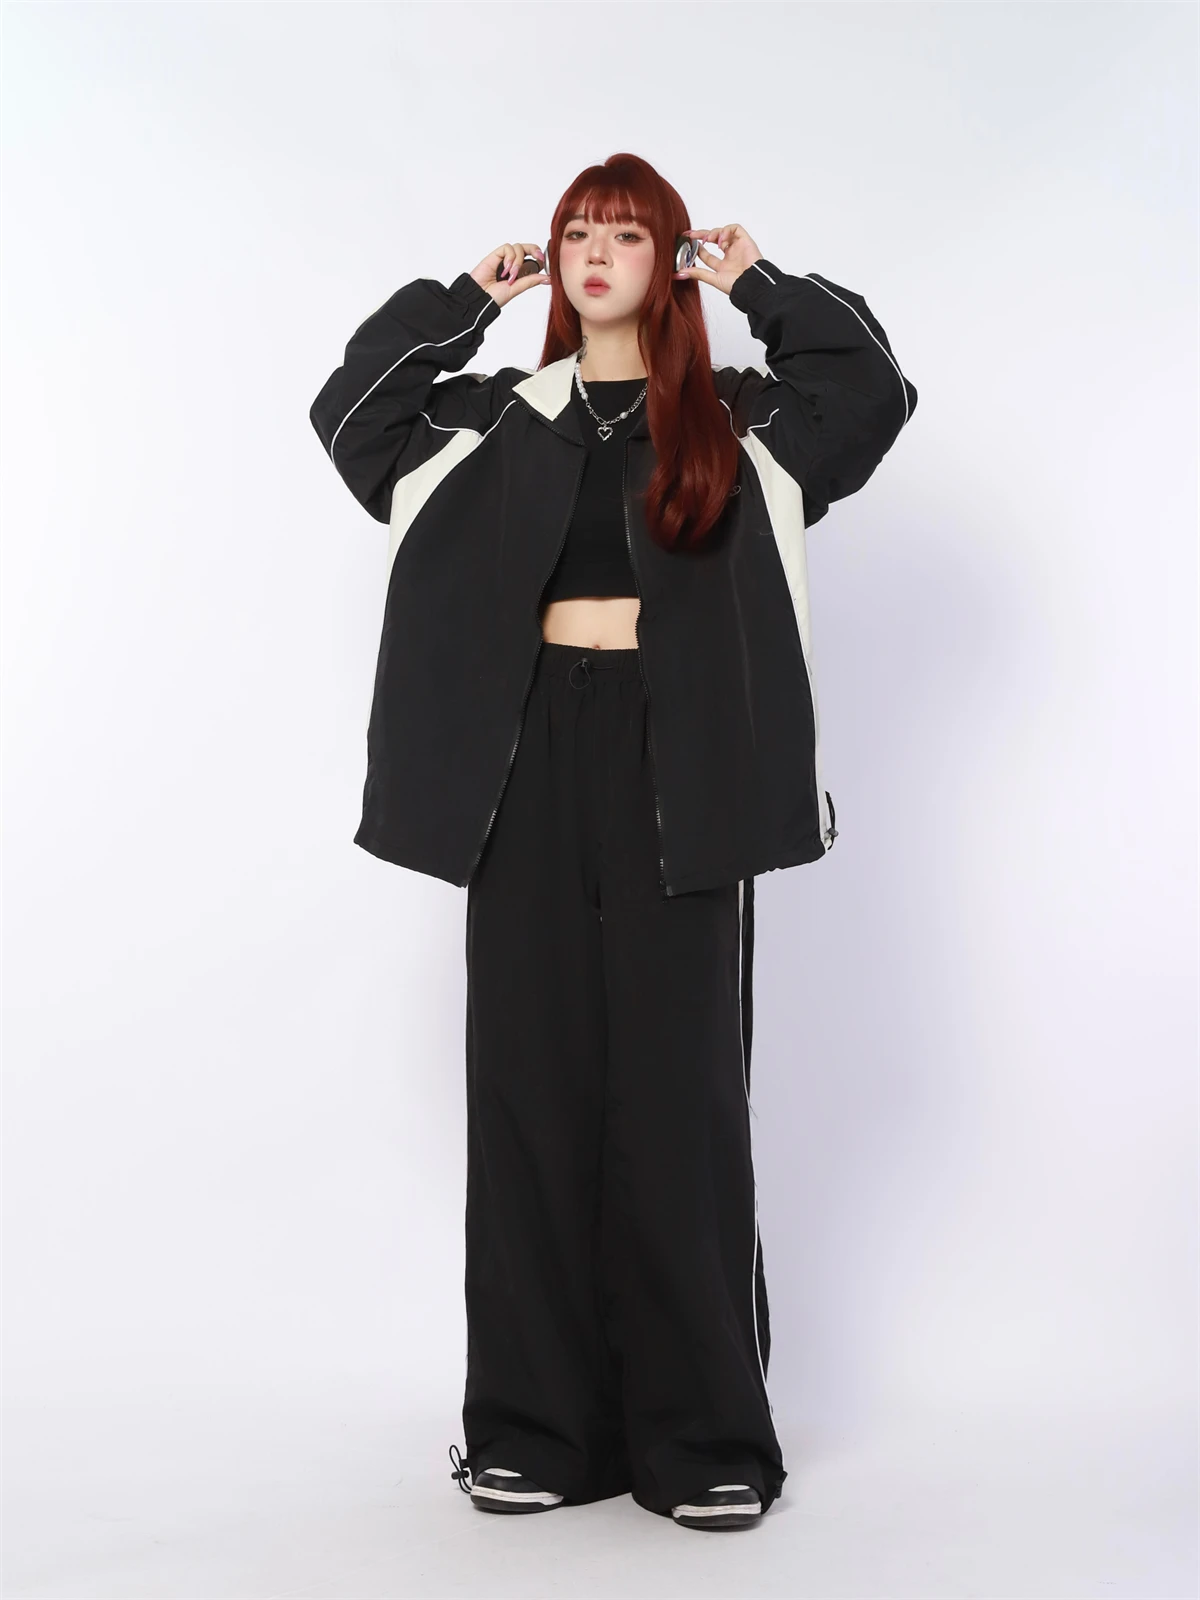 QWEEK Y2K Streetwear Black Pants Sets Women Gorpcore Vintage Hip Hop Patchwork Jacket Oversized Harajuku Kpop Fashion Sweatpants